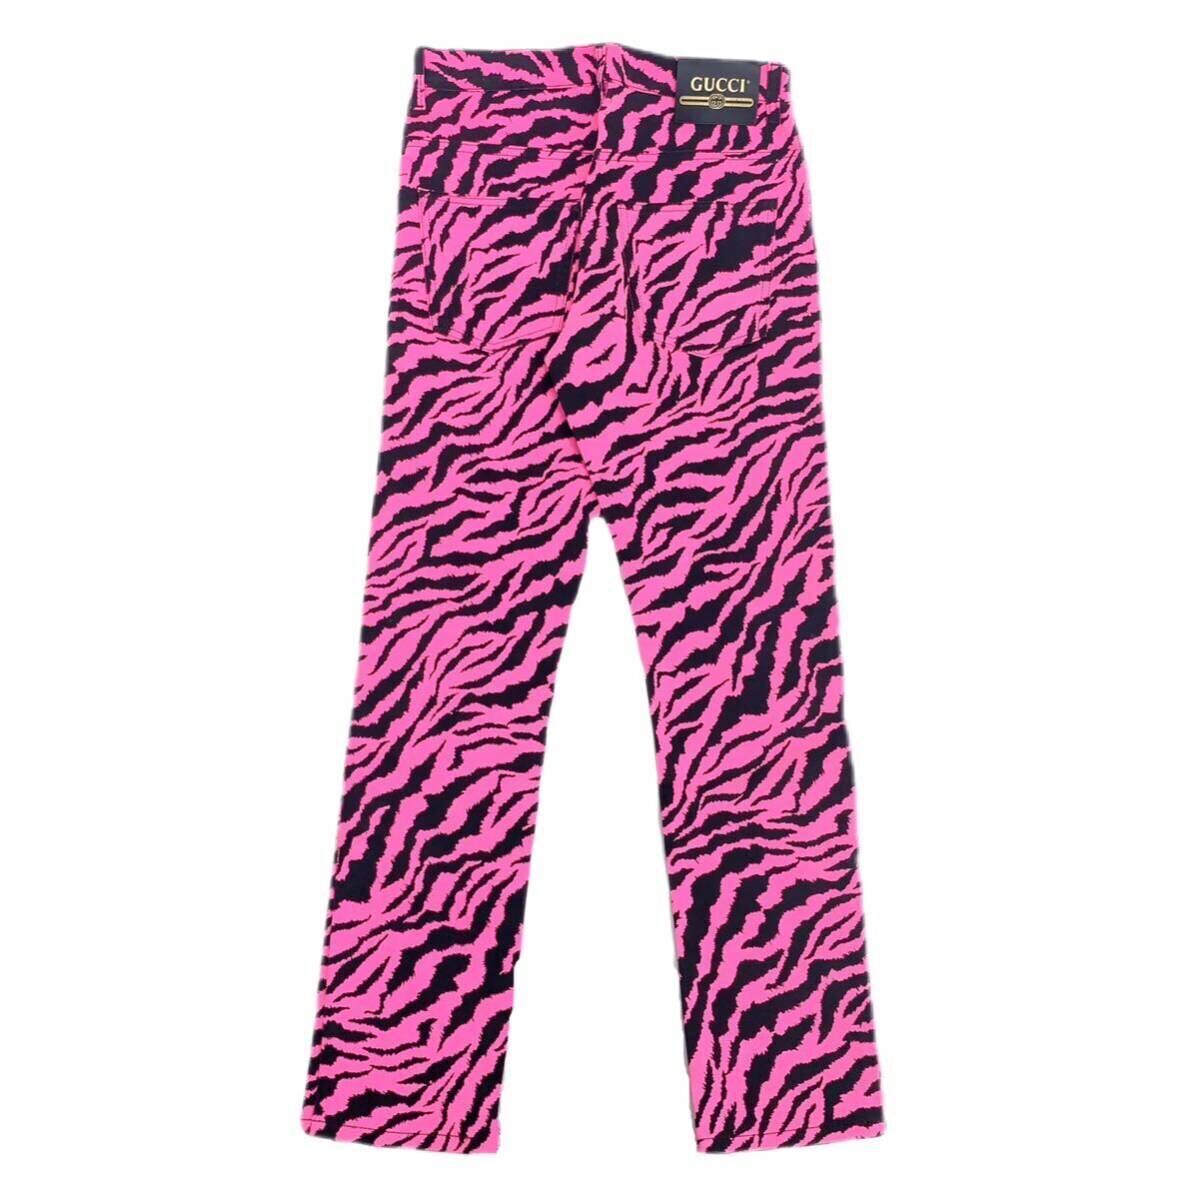  ultimate beautiful goods GUCCI Gucci Denim pants skinny bi bit pink colorful animal pattern 